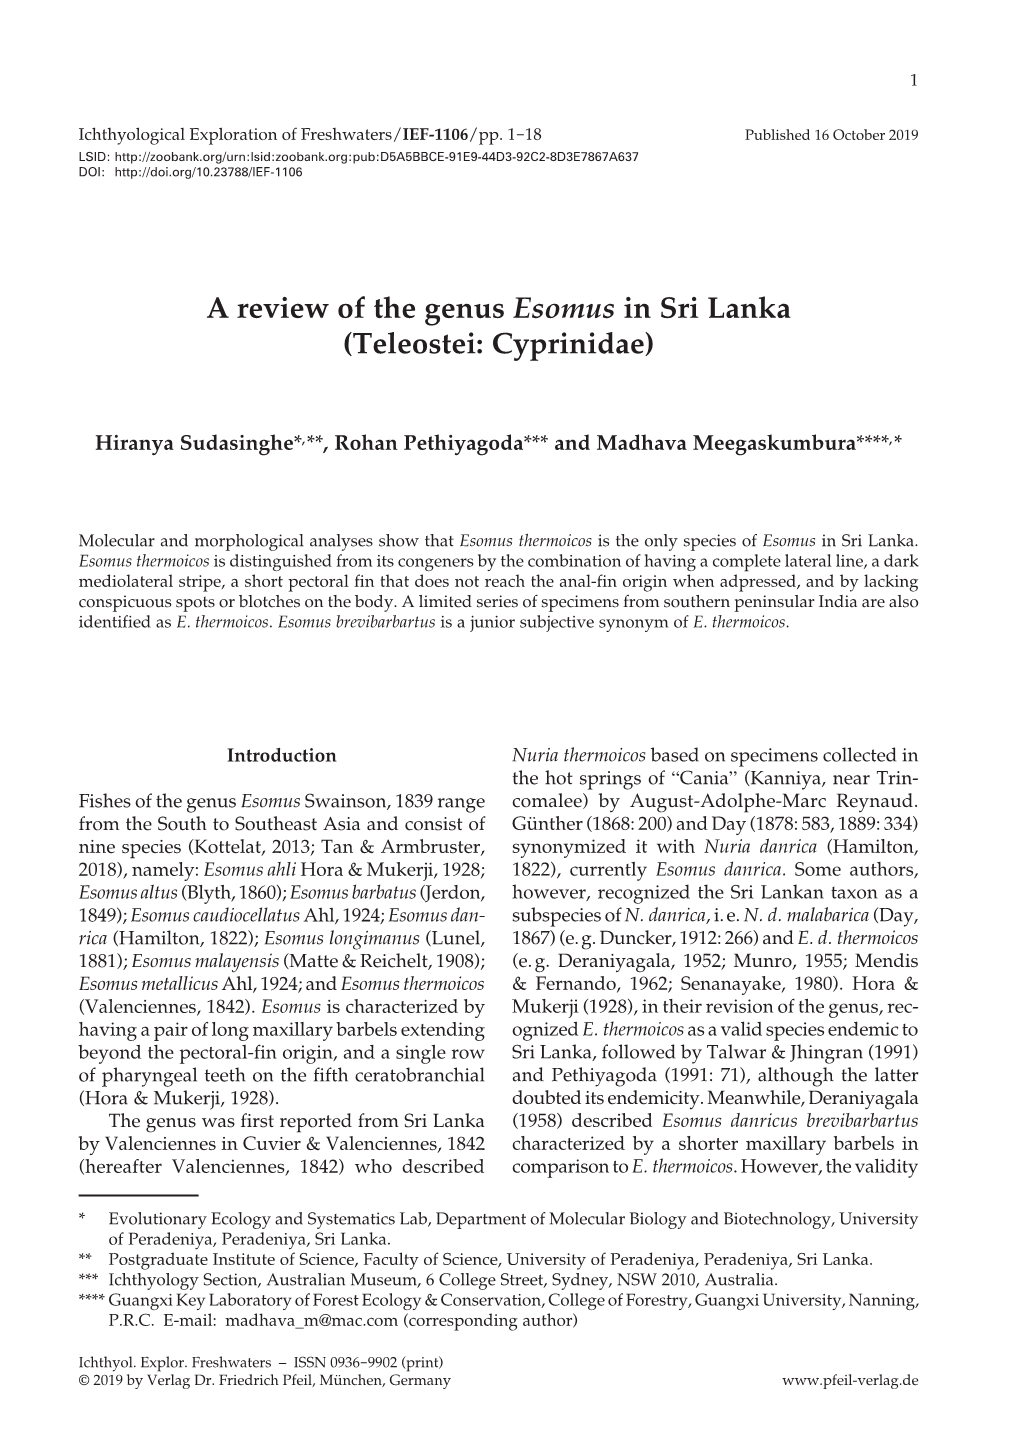 A Review of the Genus Esomus in Sri Lanka (Teleostei: Cyprinidae)